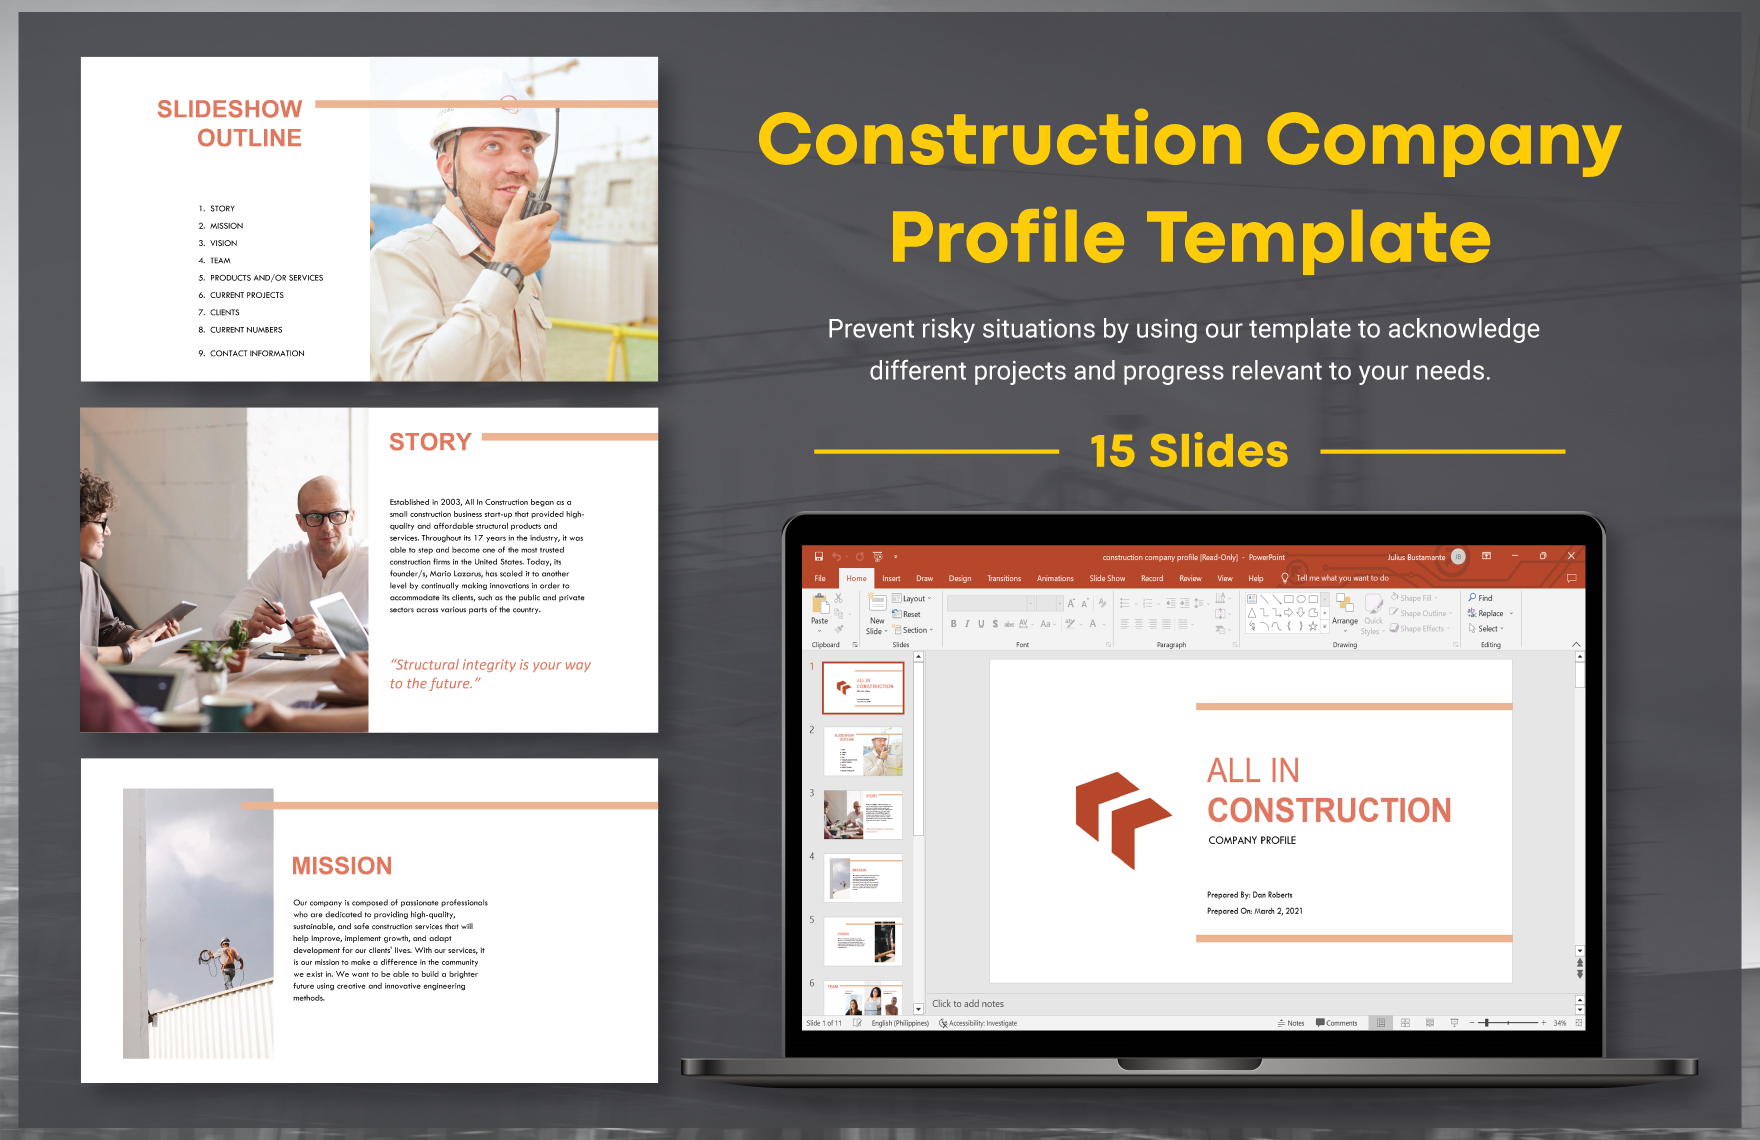 Construction Company Profile Template